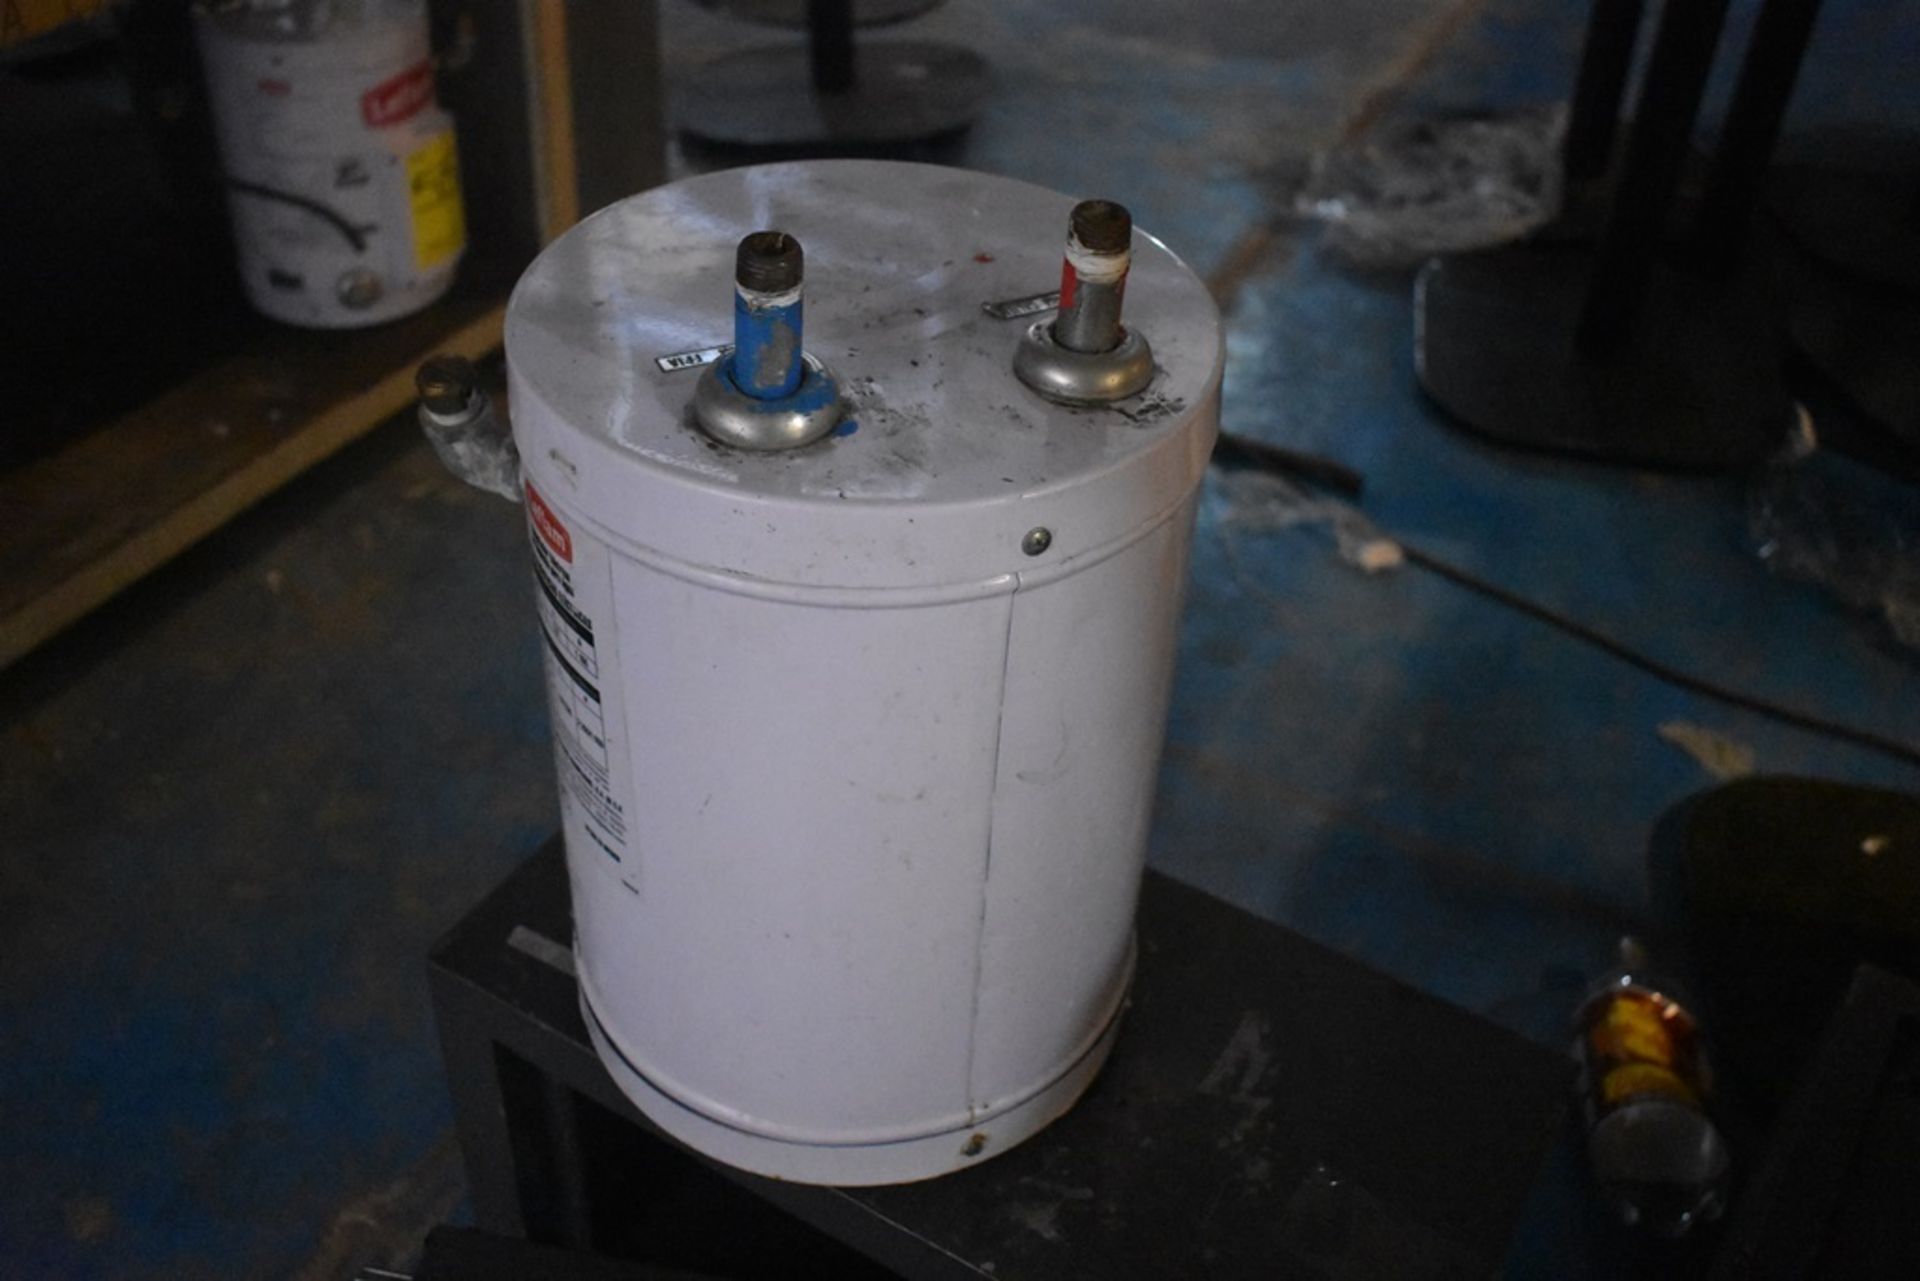 Calentador eléctrico marca Leflam, Modelo: 204-009, Serie: 18F200157, Capacidad: 9 litros. - Image 3 of 6